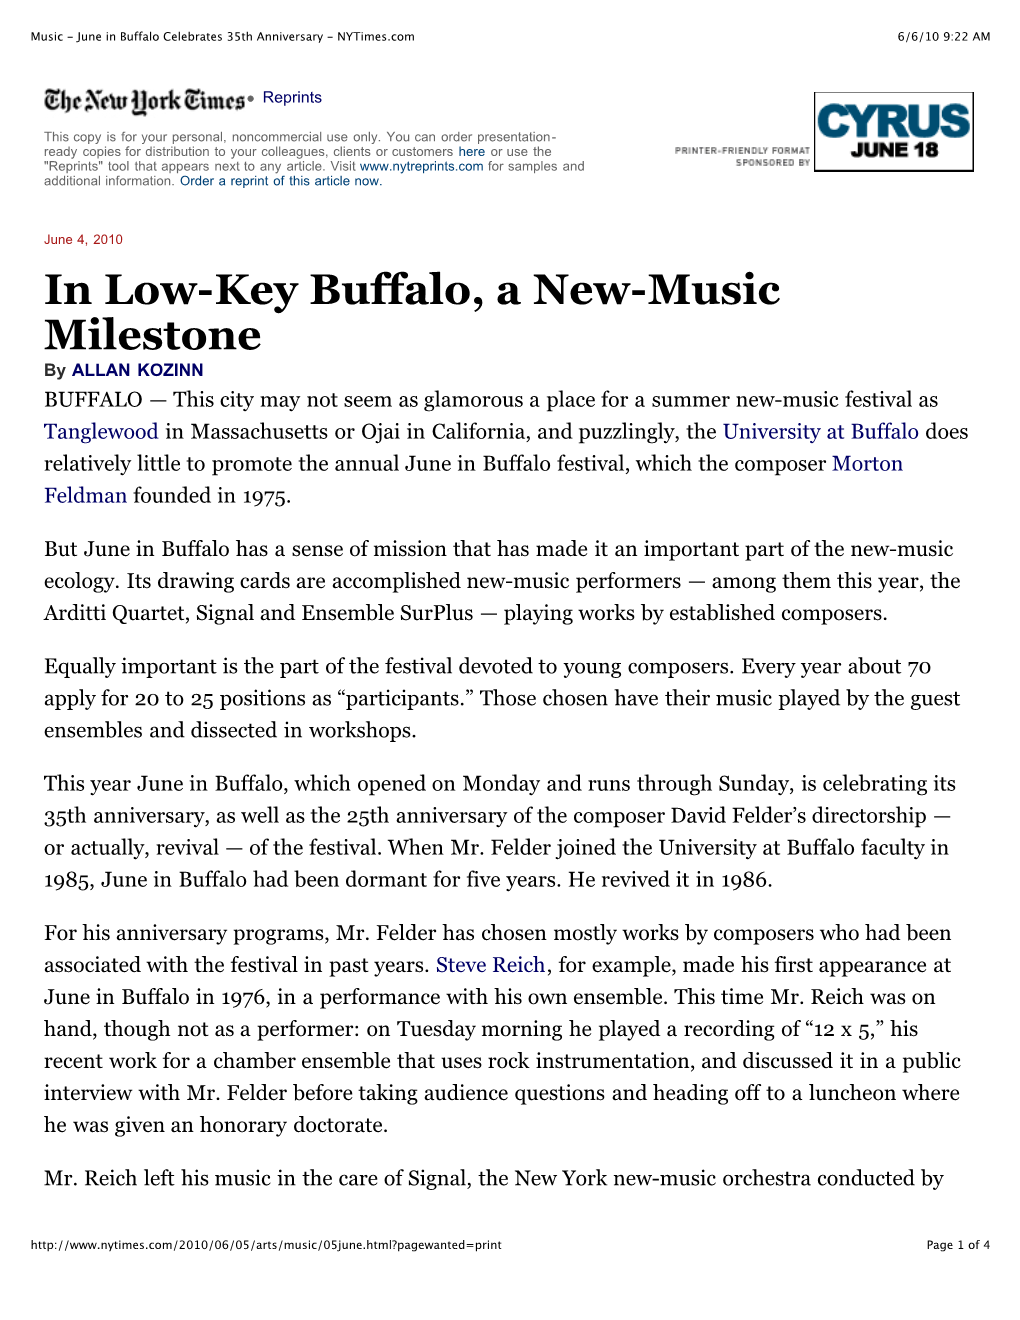 In Low-Key Buffalo, a New Music Milestonedownload Pdf(113